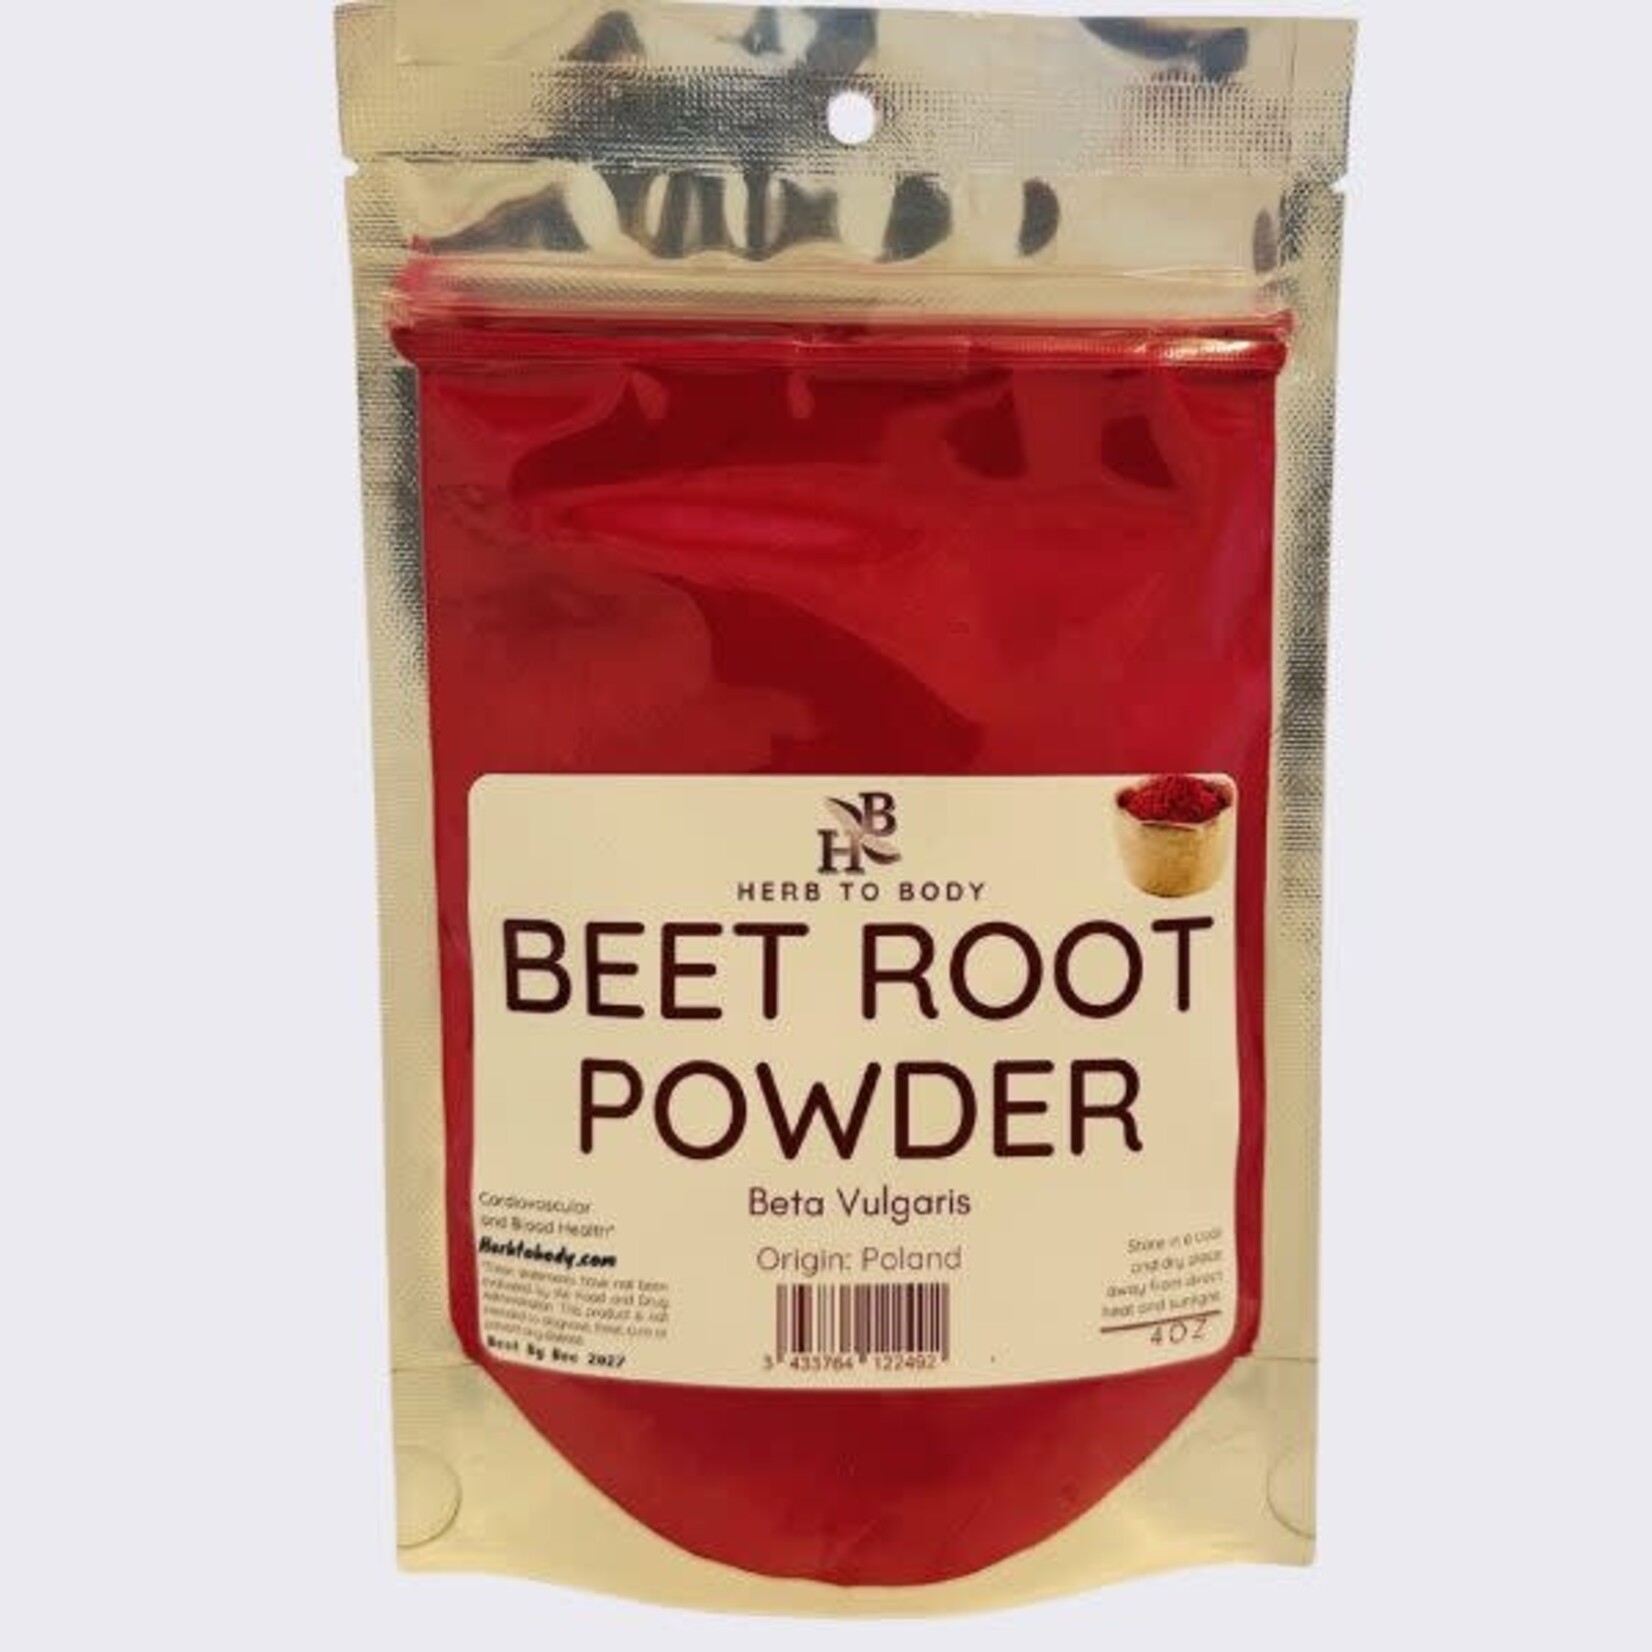 Herb to Body Herb to Body Beet Root Powder 4oz